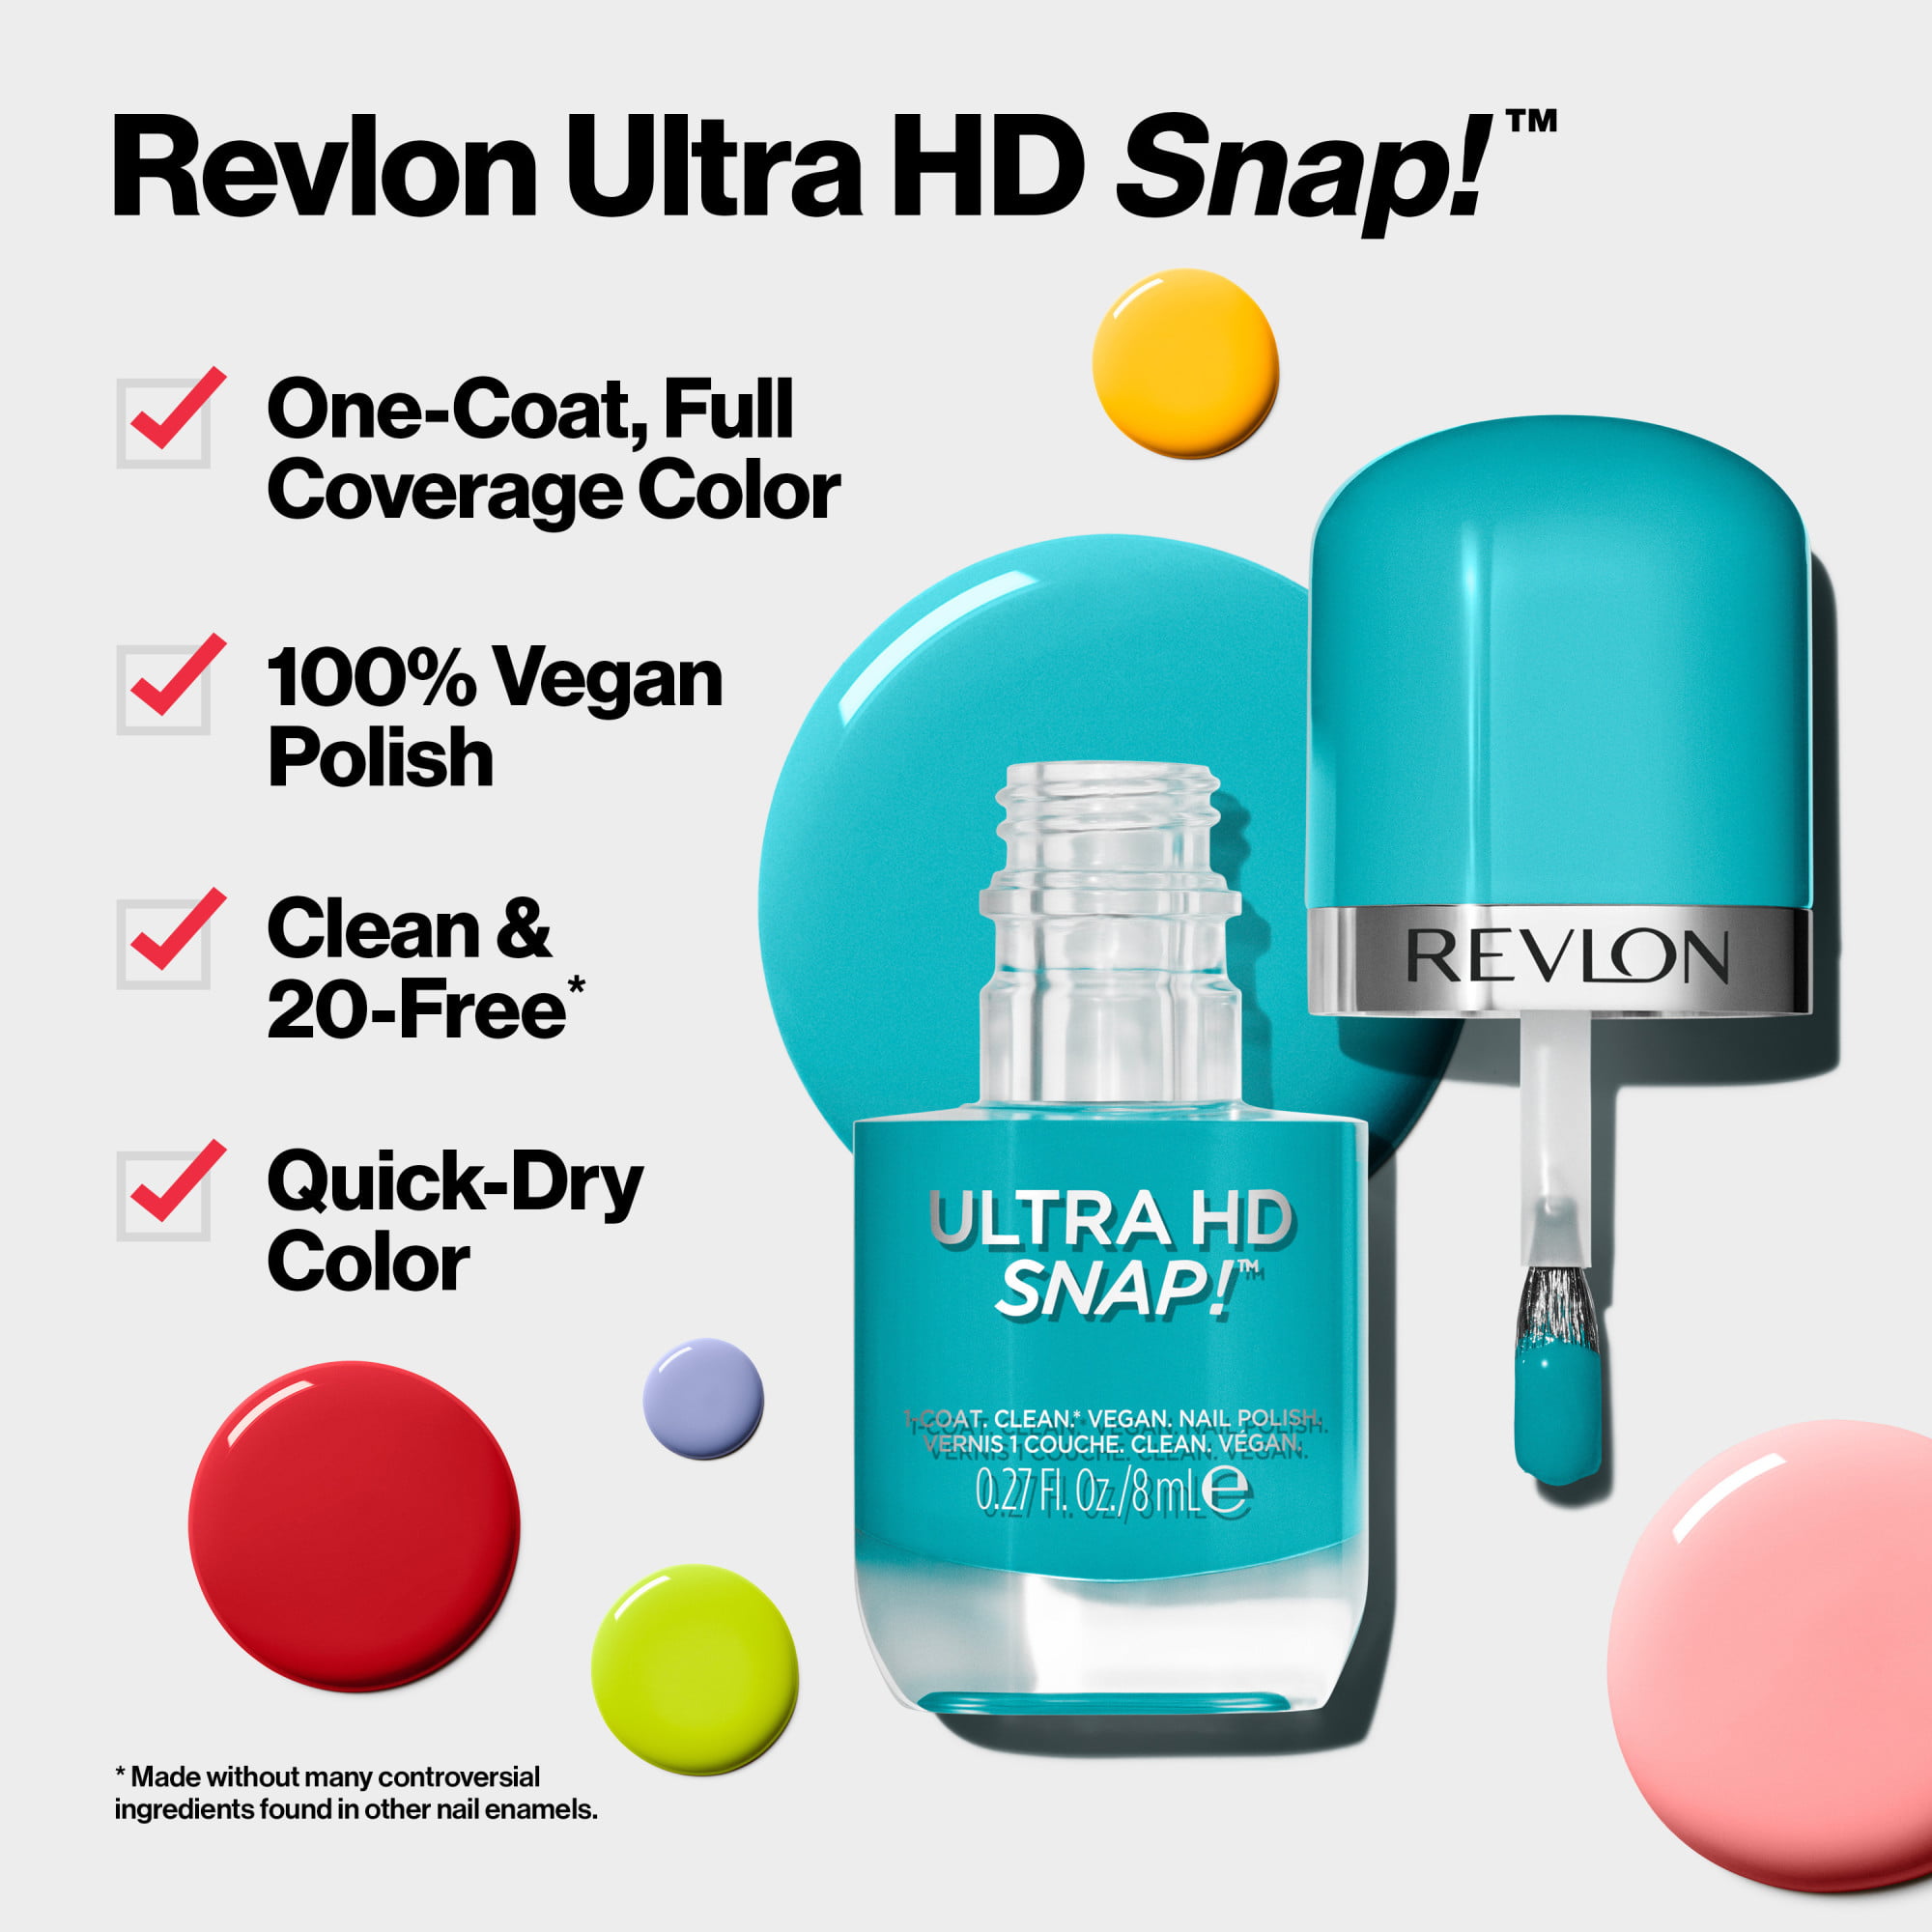 Revlon Ultra HD Snap Vegan Glossy Nail Polish, 016 Get Real, 0.27 fl oz Bottle - image 4 of 14